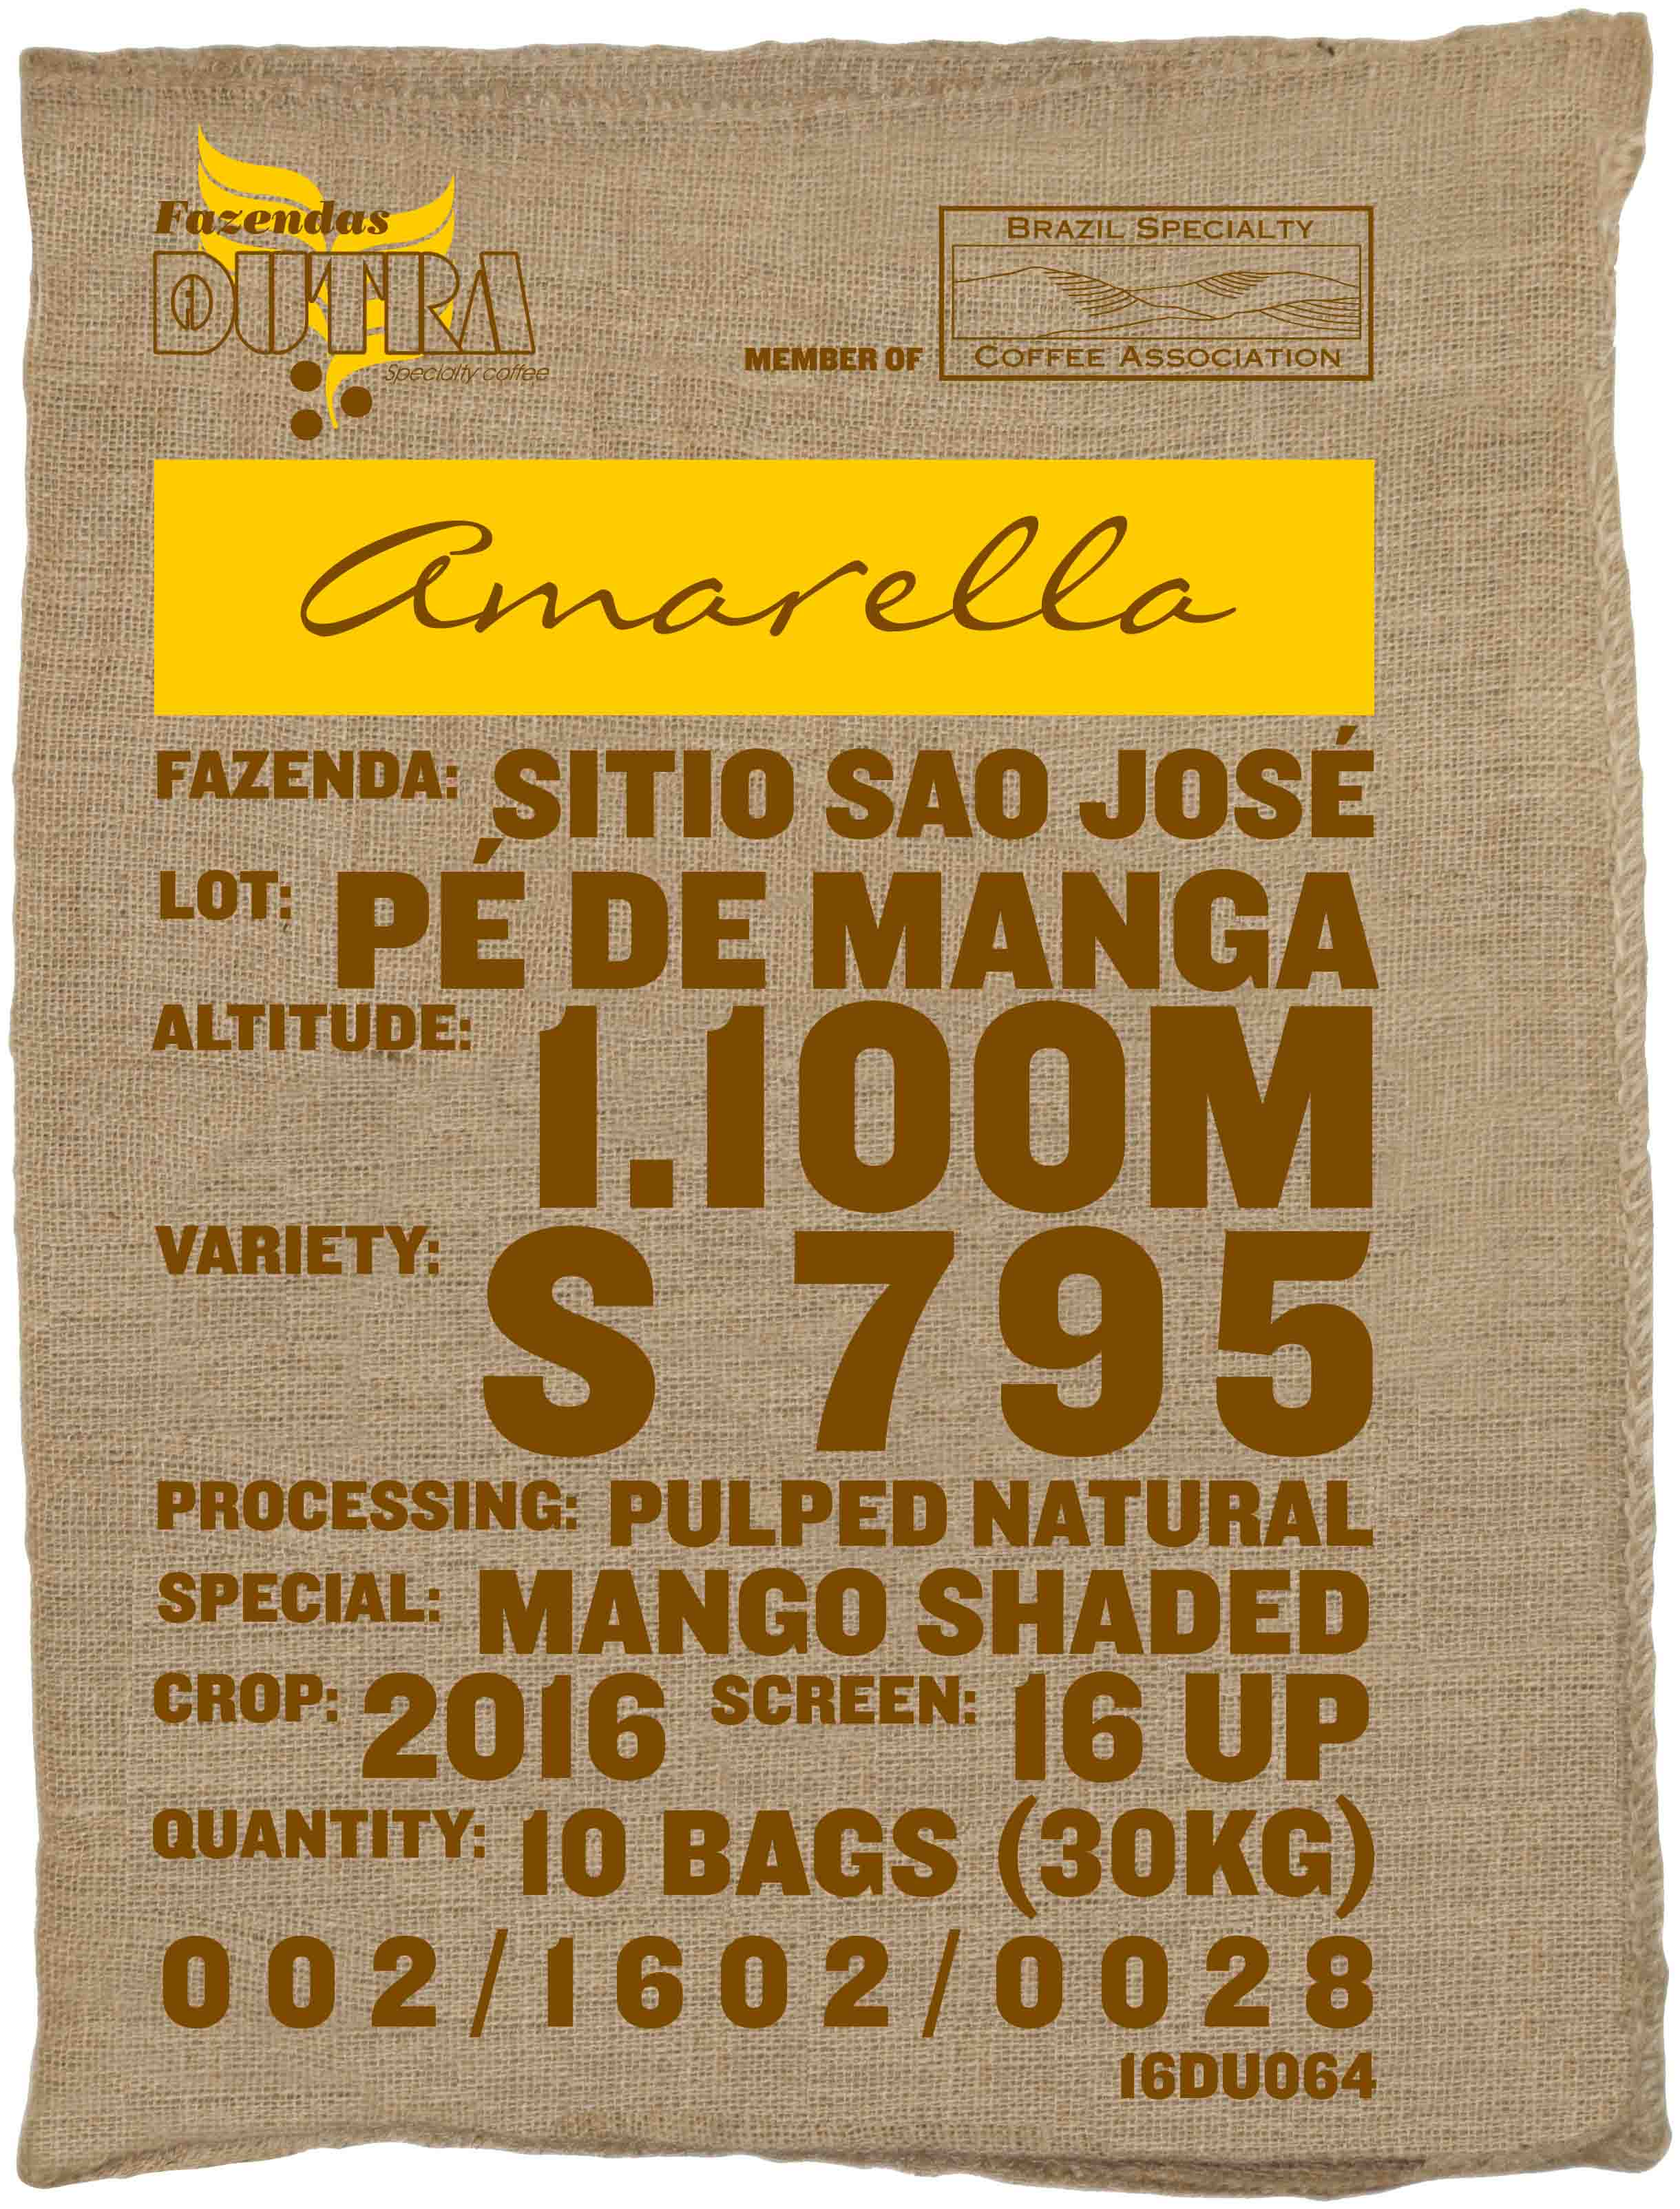 Ein Rohkaffeesack amarella Parzellenkaffee Varietät S795. Fazendas Dutra Lot Pe de Manga.